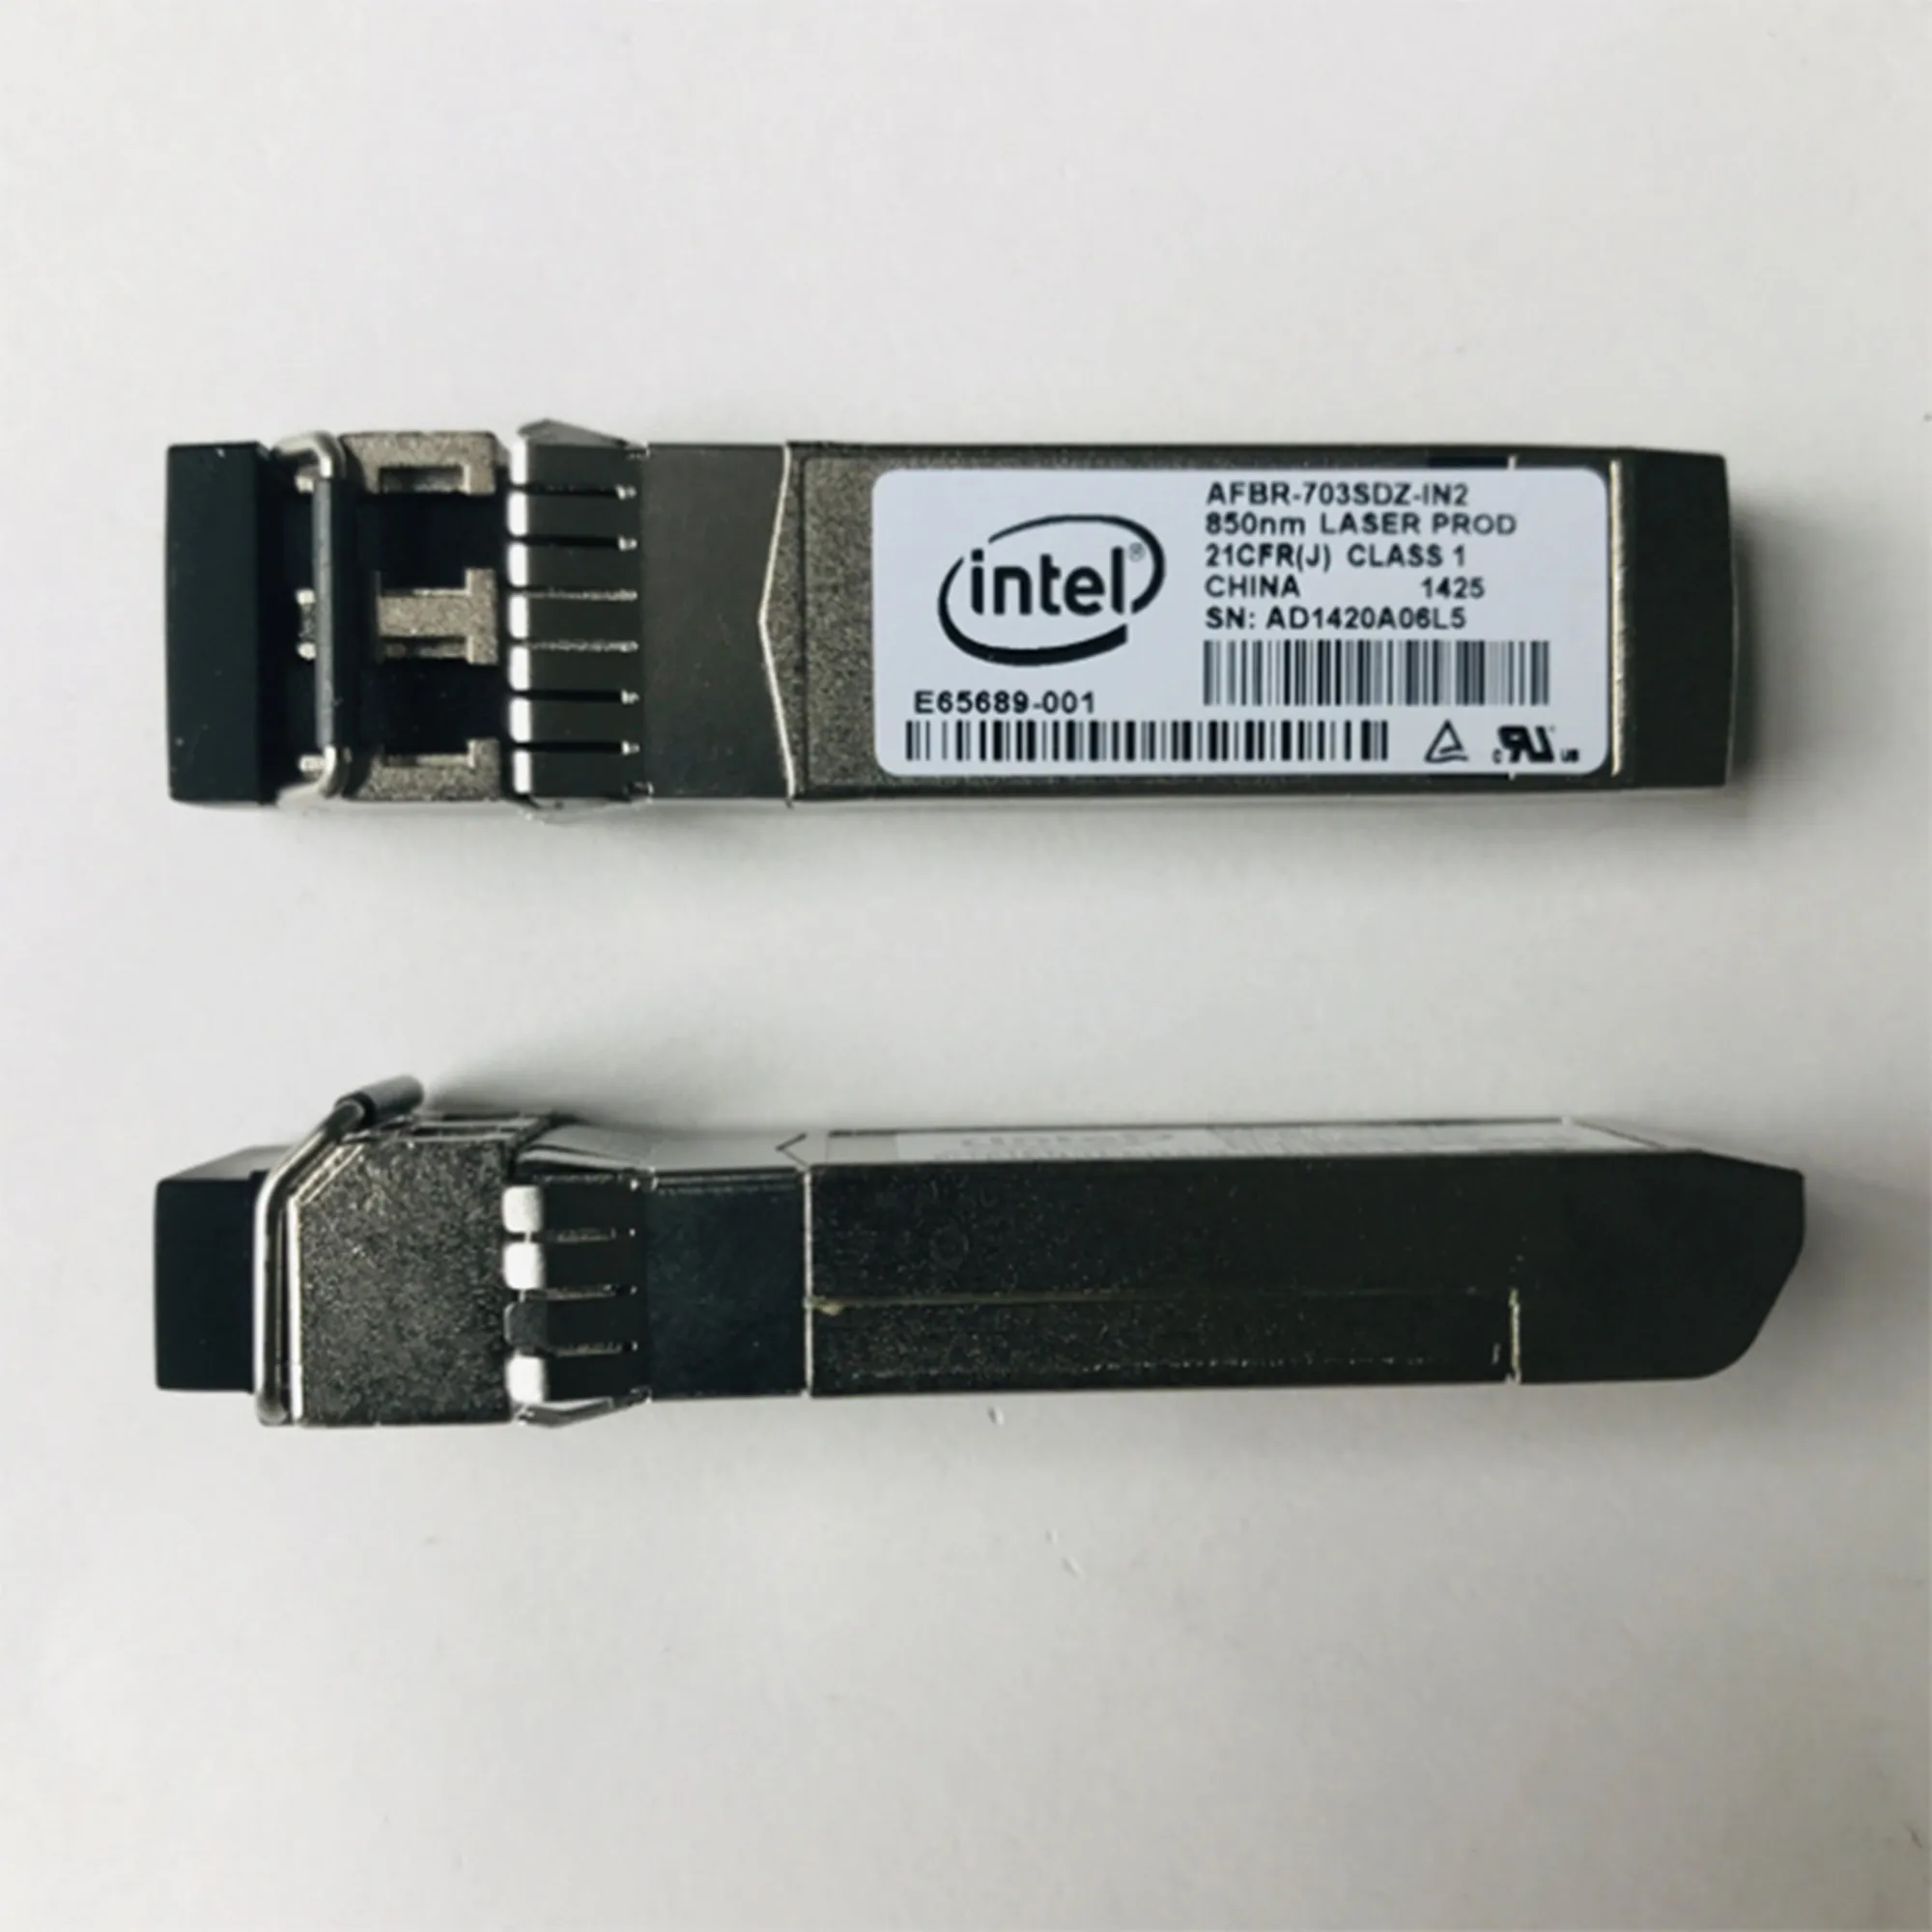 AFBR-703SDZ-IN2/Intel 10g Fiber optic module/E65689-001/10g SR X520 X710 82599 network card switches general switch 10gb sfp enlarge